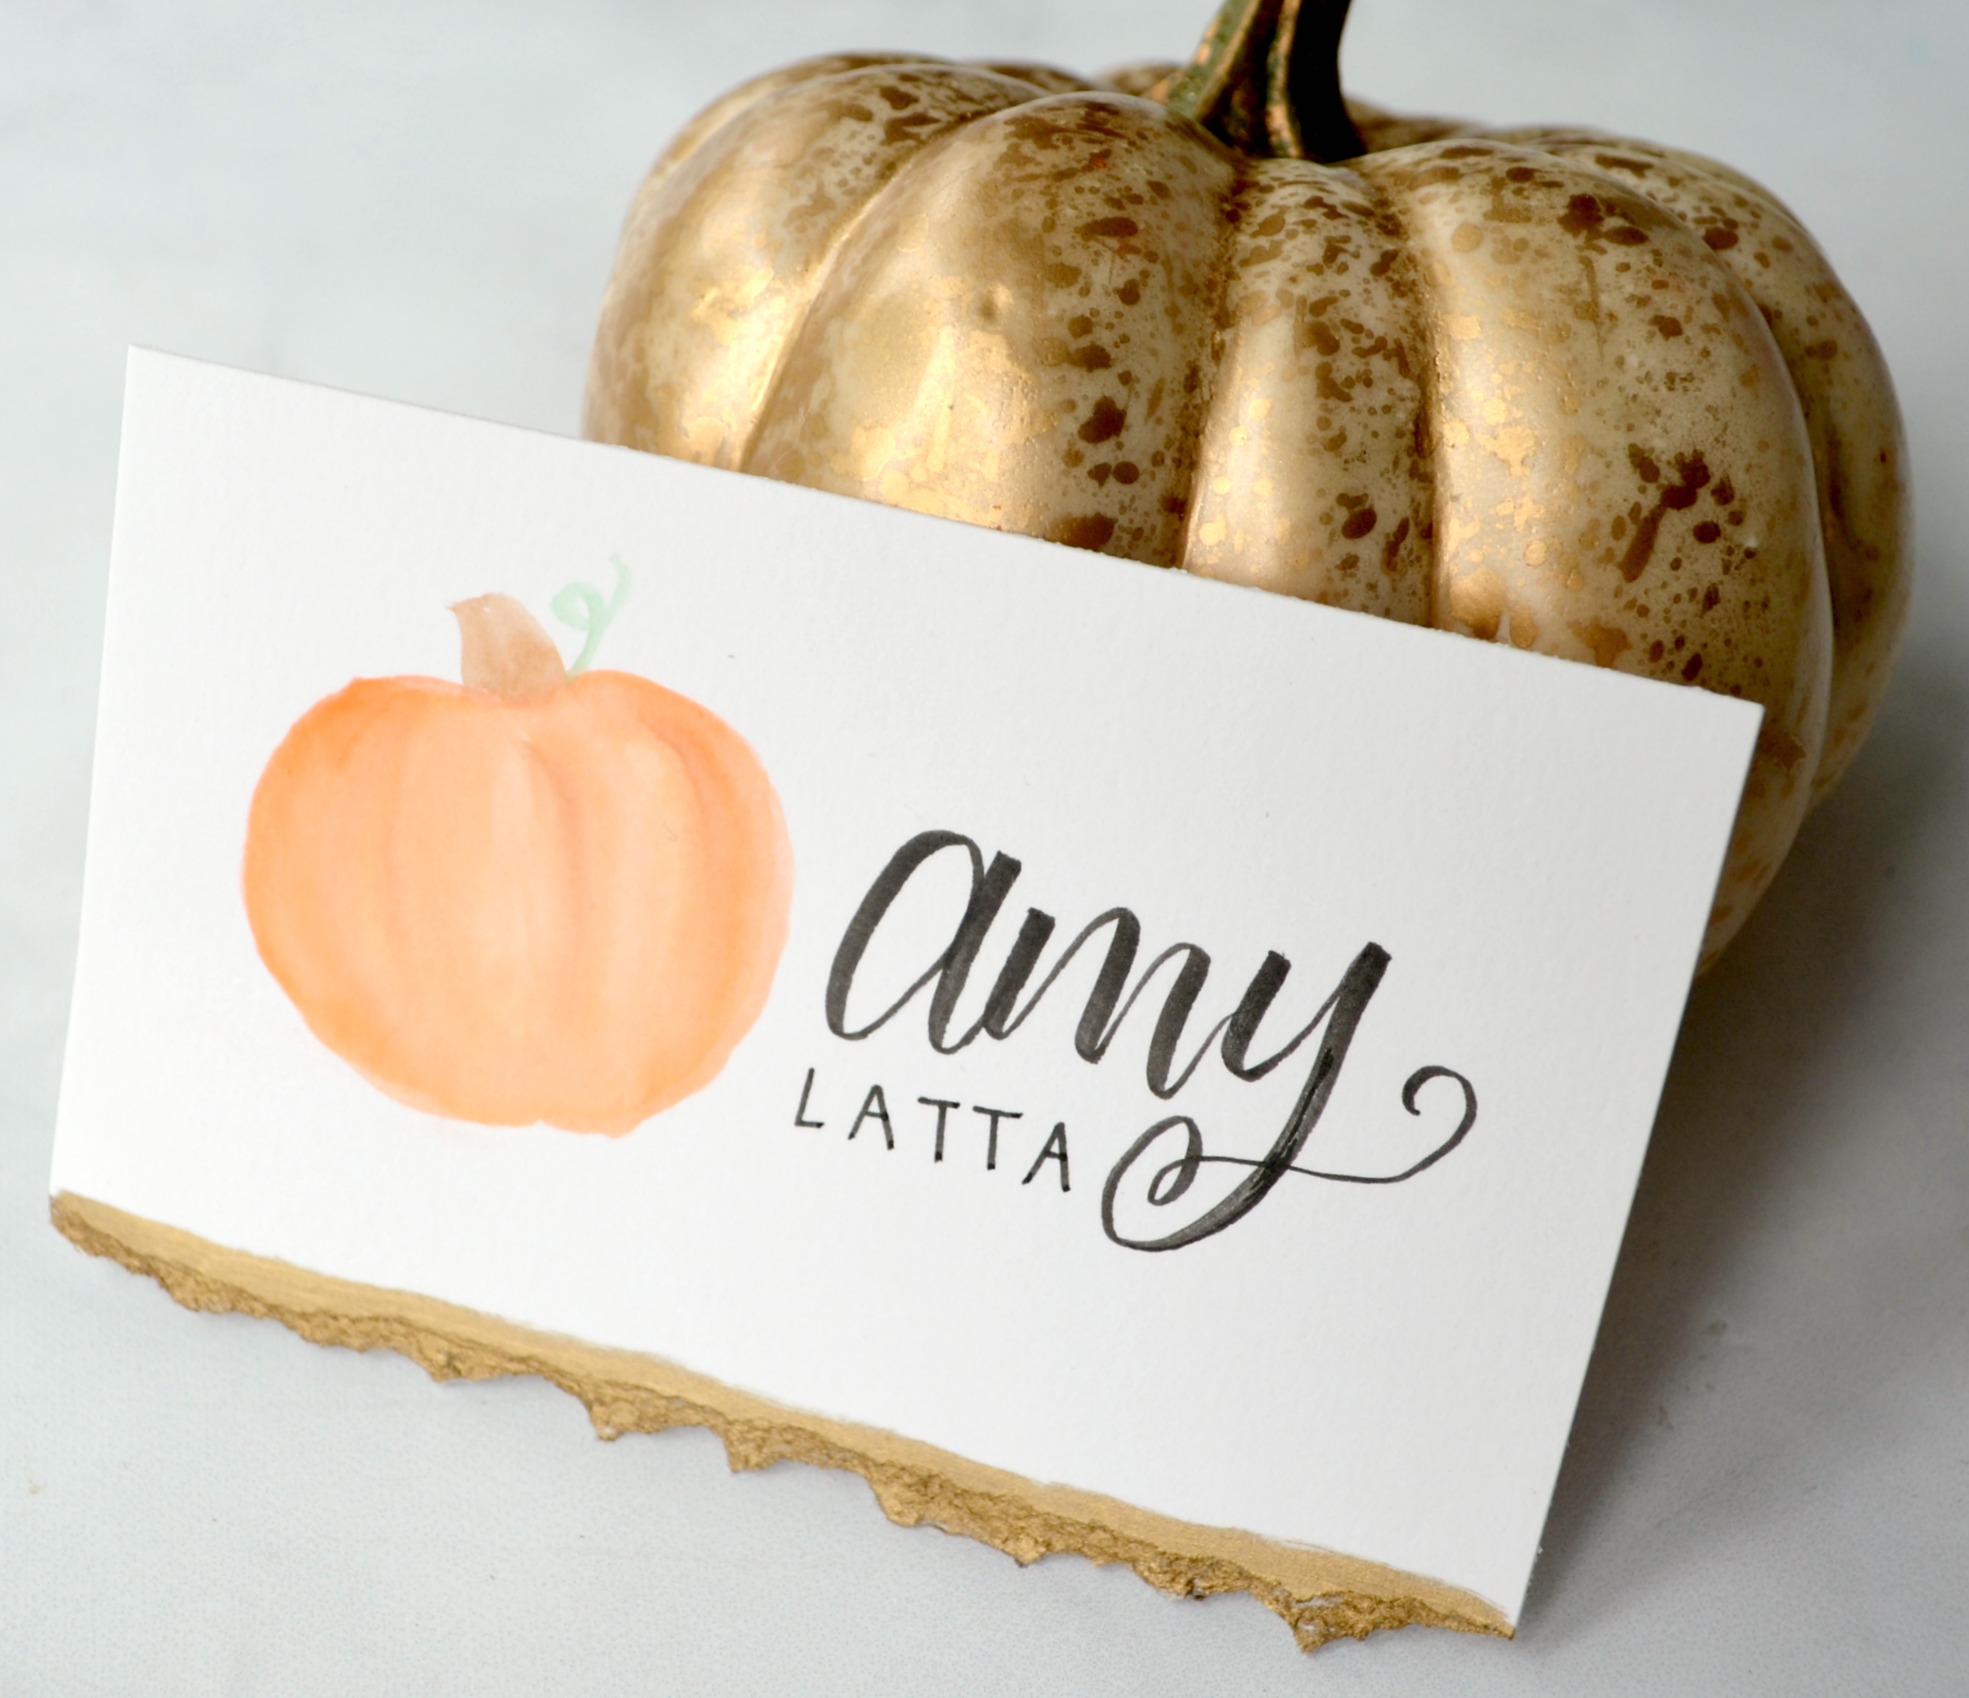 DIY Hand Lettered Pumpkin Placecards